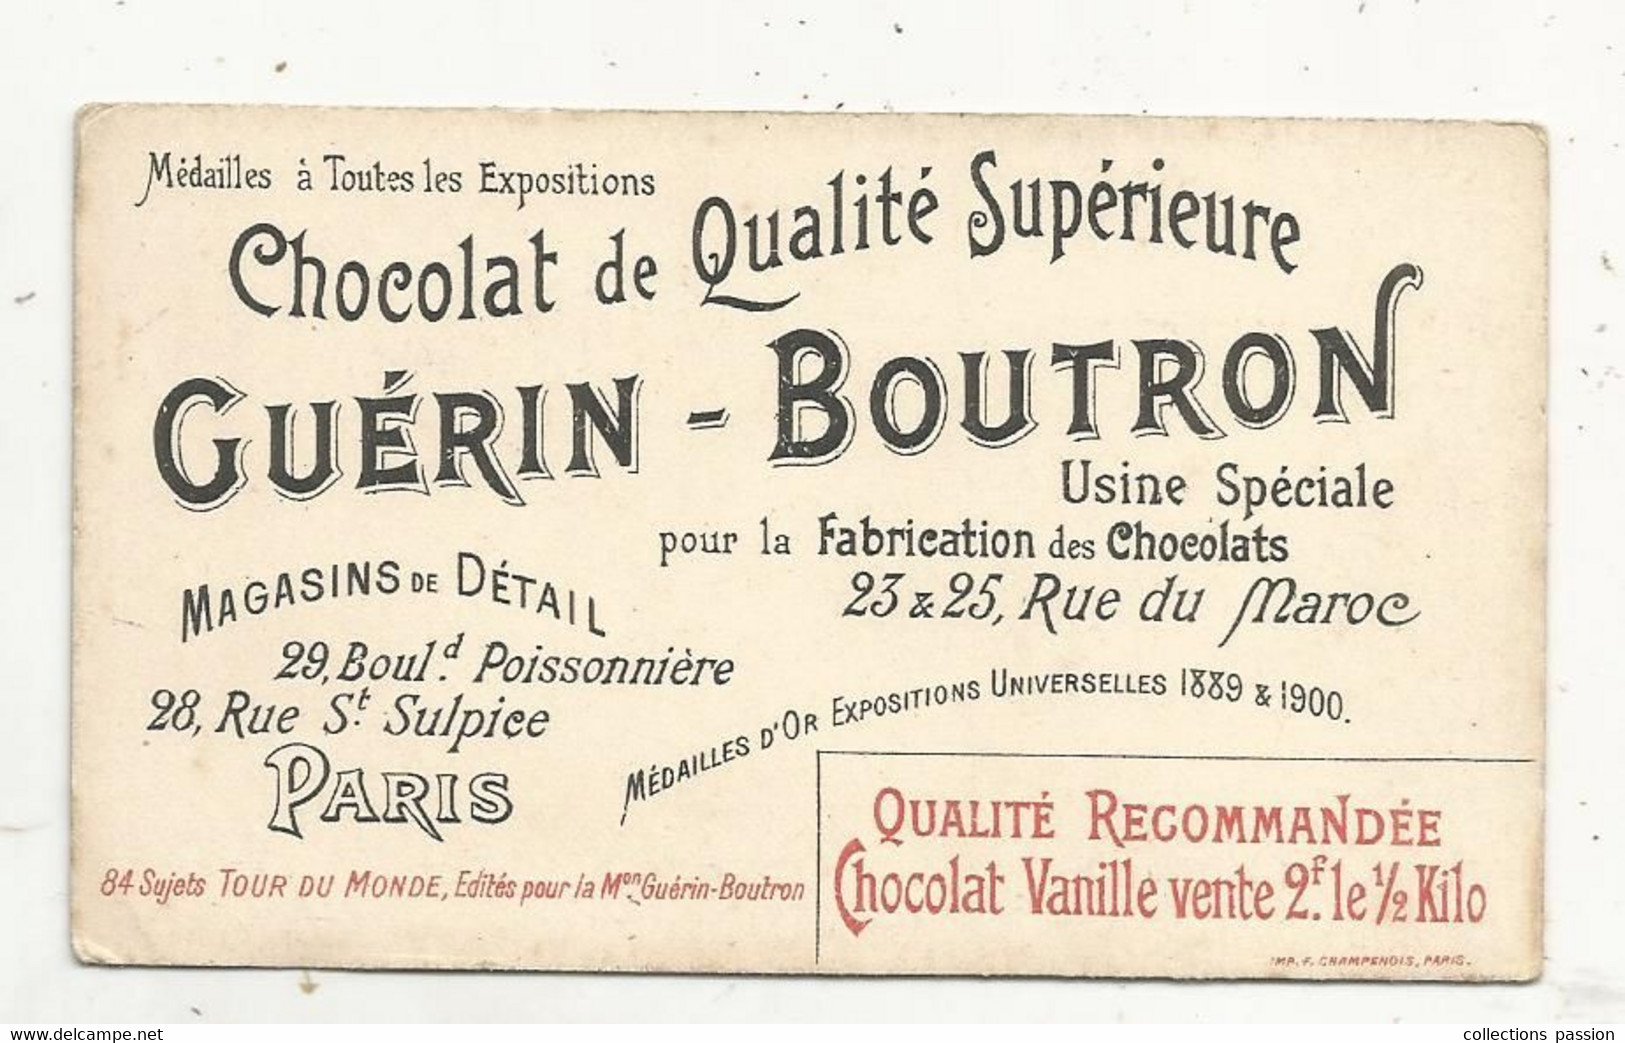 Chromo , Chocolat GUERIN-BOUTRON, Le Tour Du Monde En 84 étapes , A VENISE, 2 Scans - Guérin-Boutron